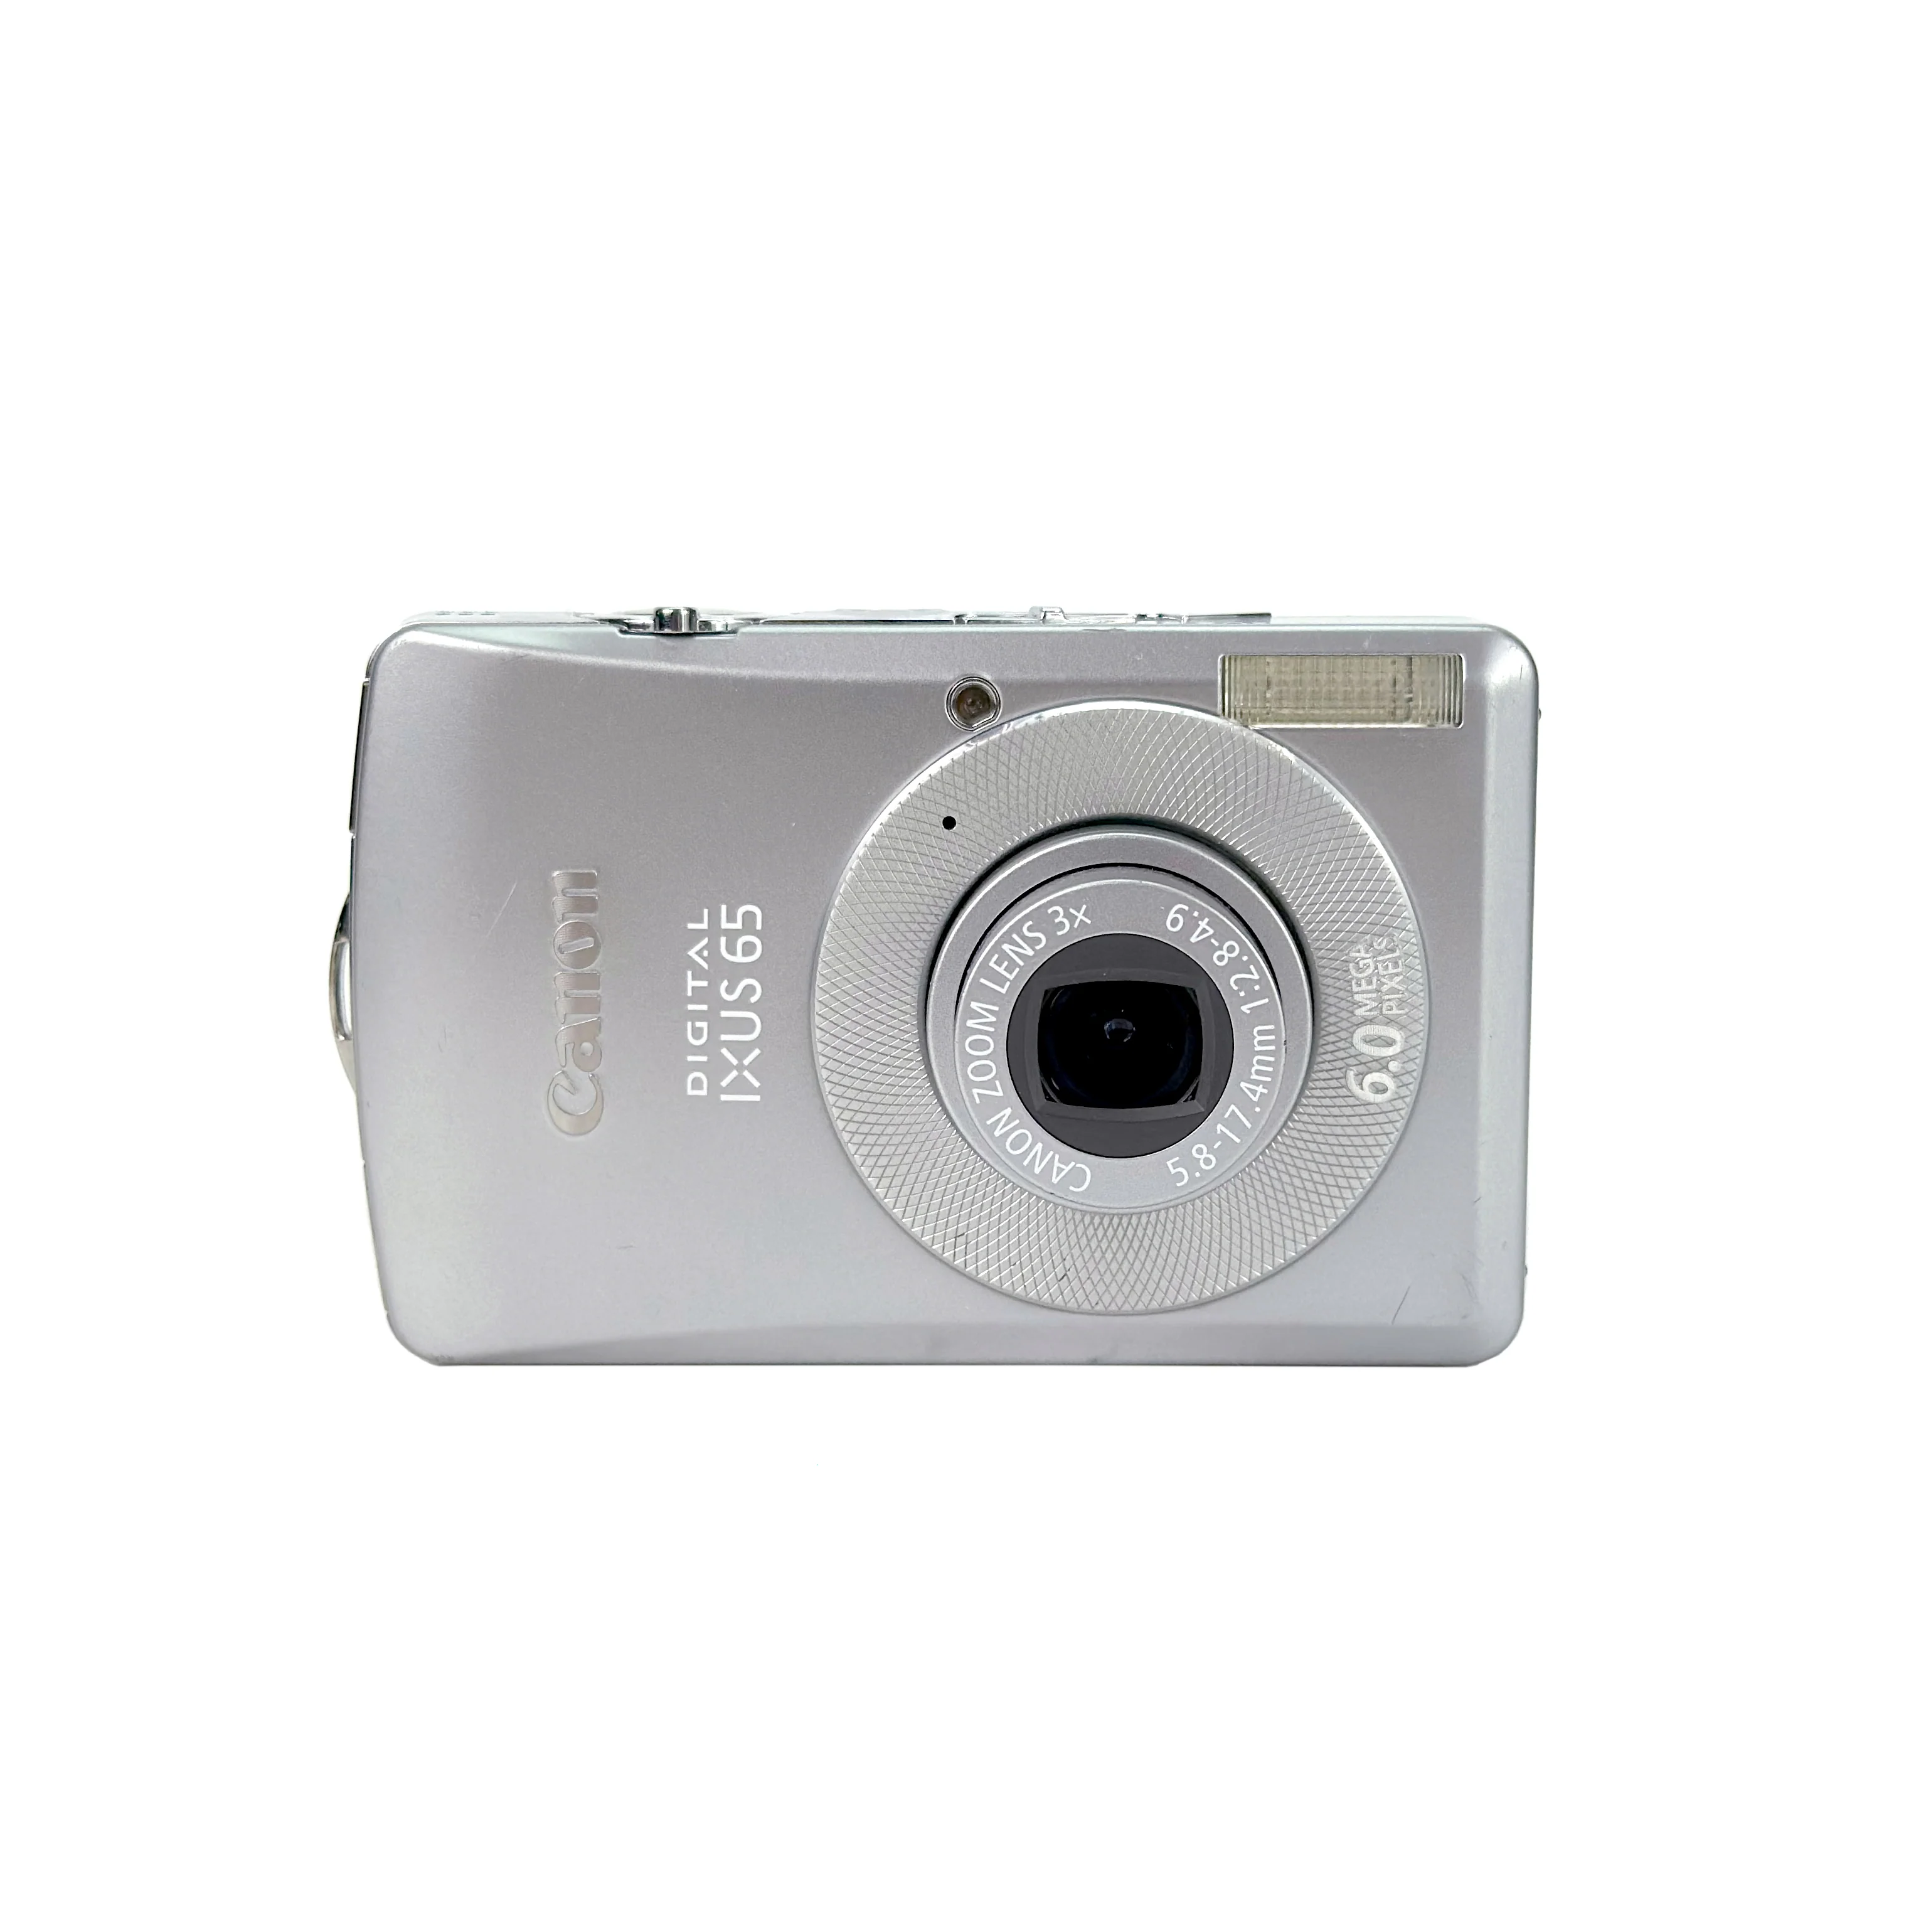 PowerShot SD630 Digital ELPH Camera